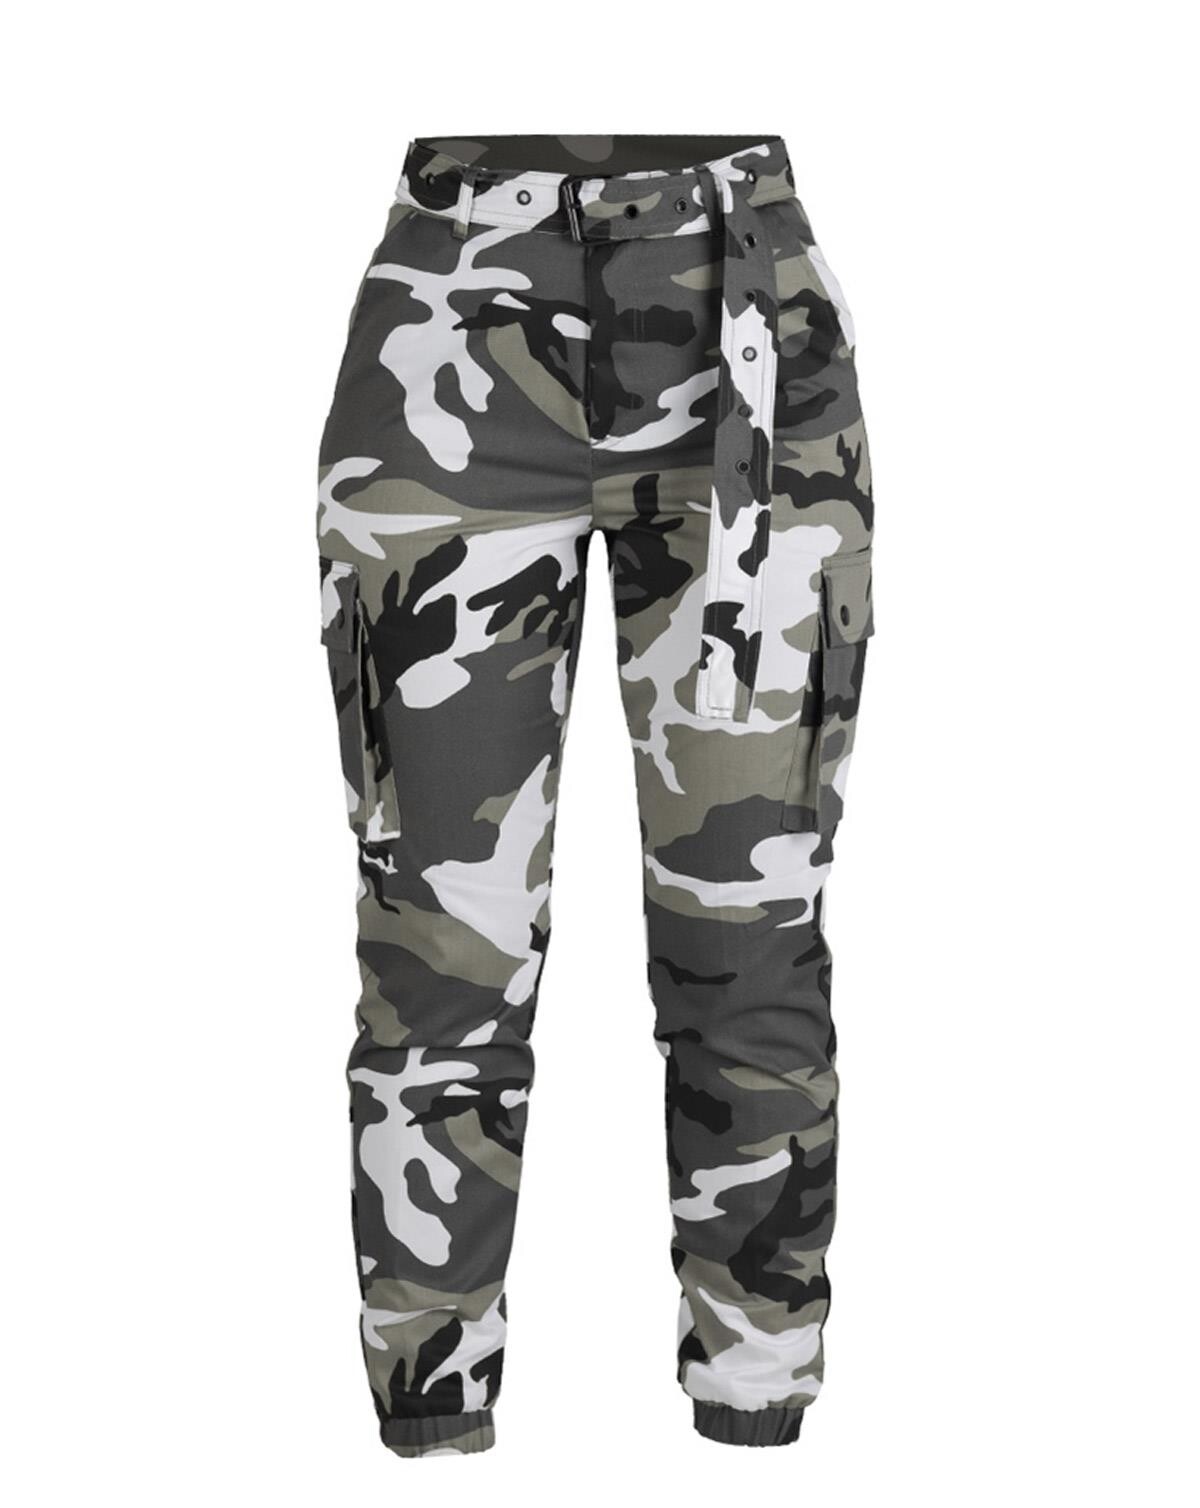 4: Mil-Tec Army Pants for Women (Urban Camo, XL)